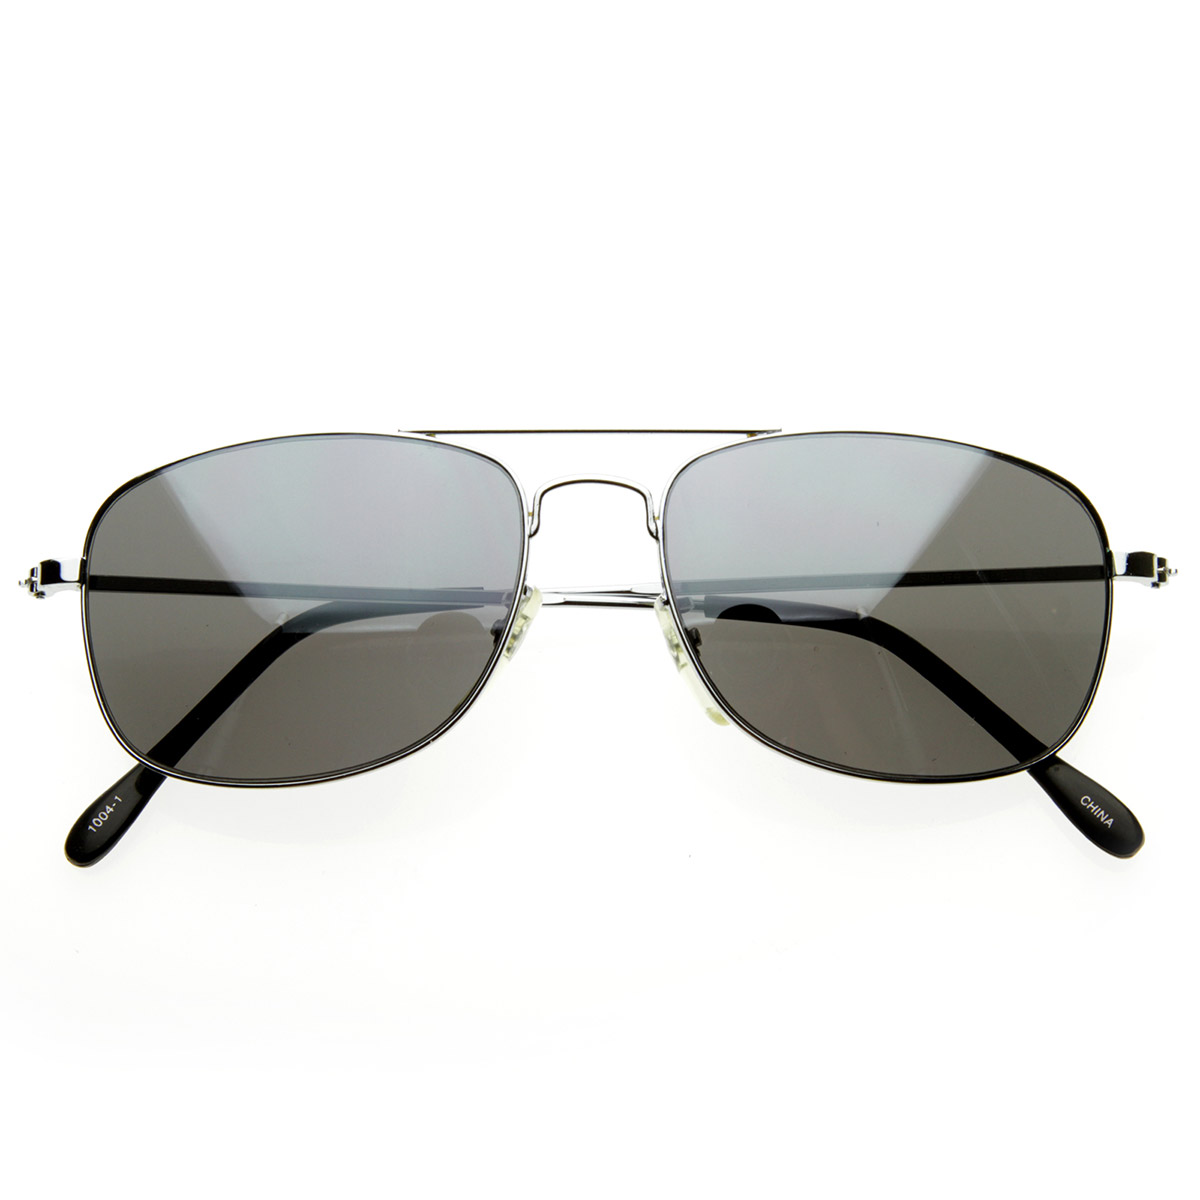 AVIATORS Classic Square Wire Metal Aviator Sunglasses w/ Mirrored Lens